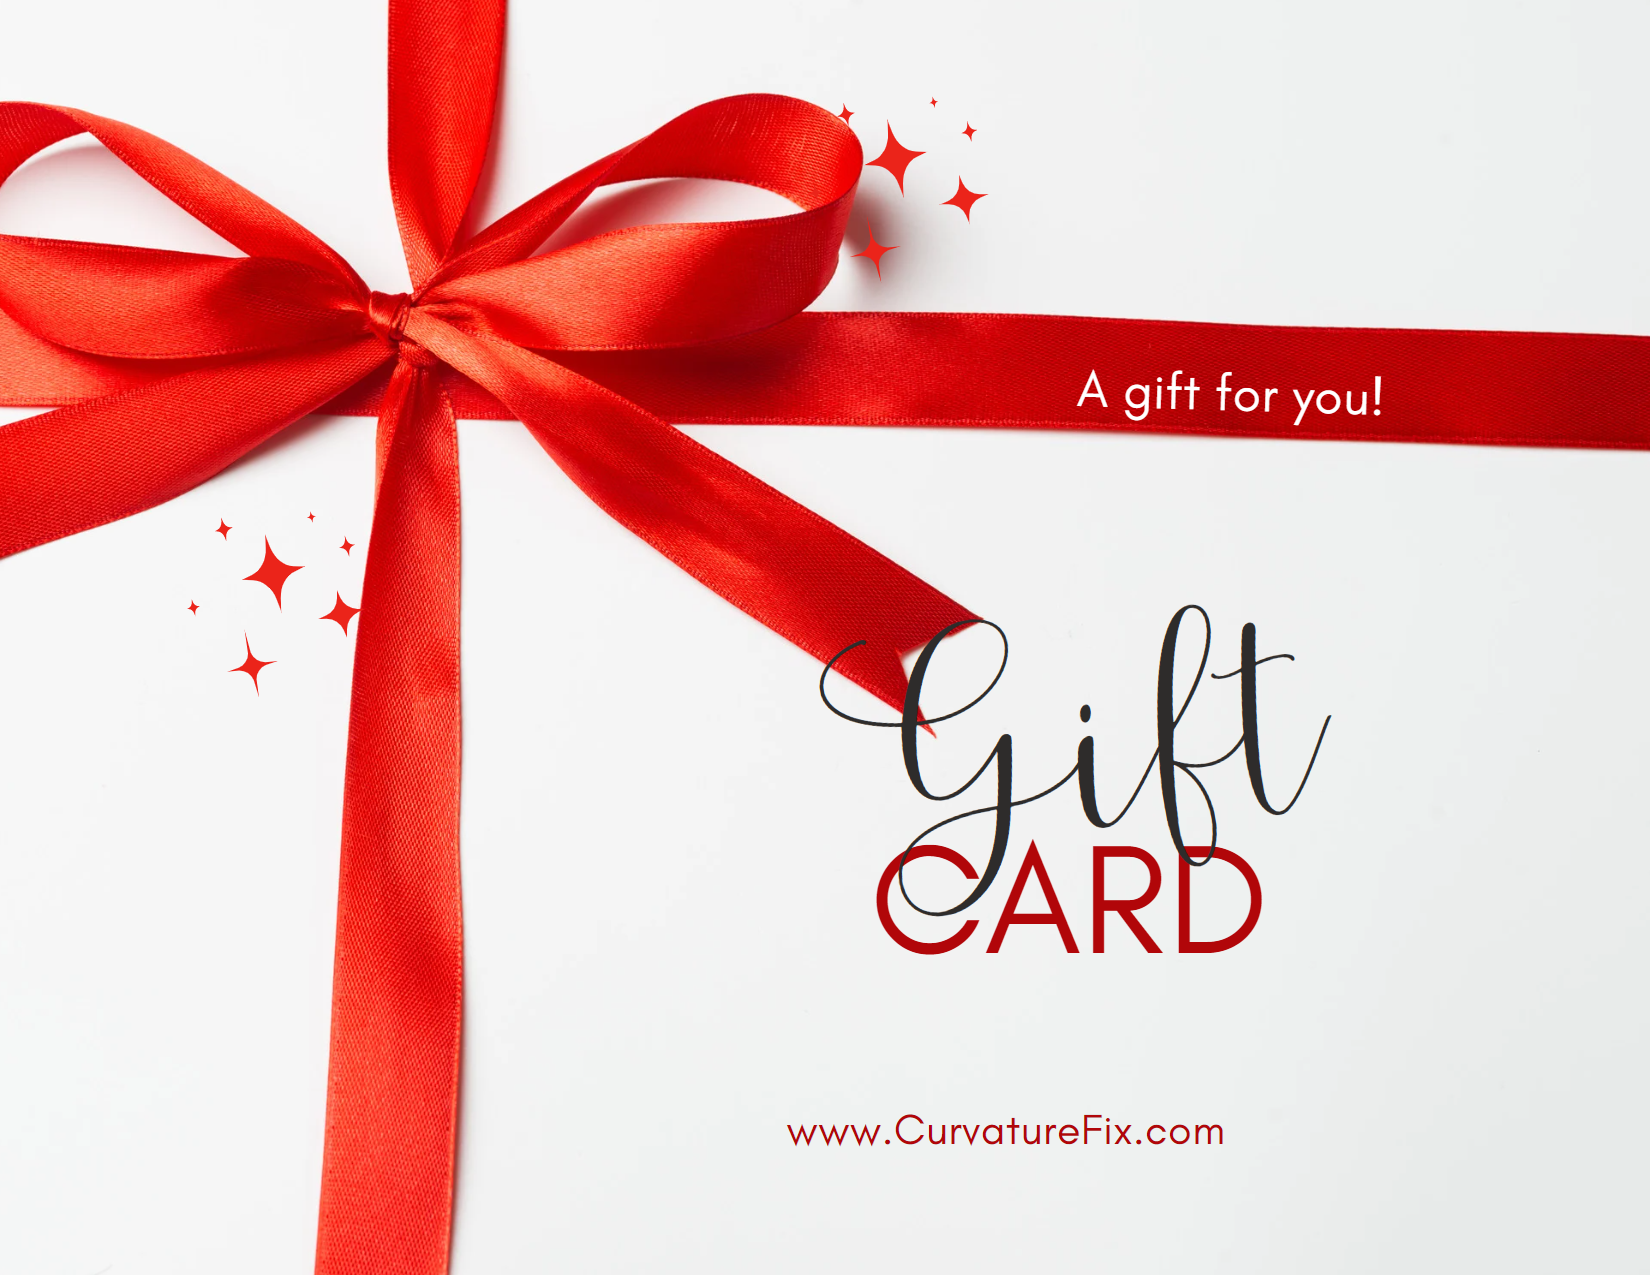 CurvatureFix Gift Card